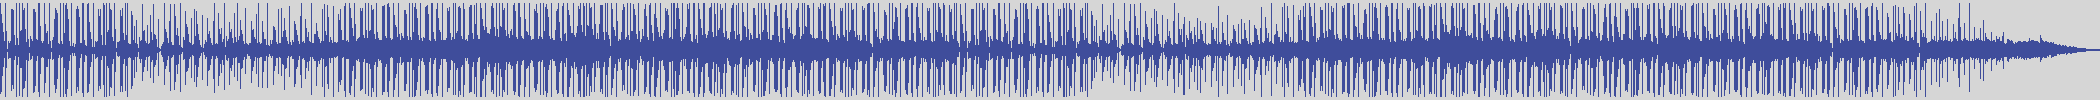 noclouds_chillout [NOC144] Waldo Munoz - Reverse [Miami Beach Mix] audio wave form